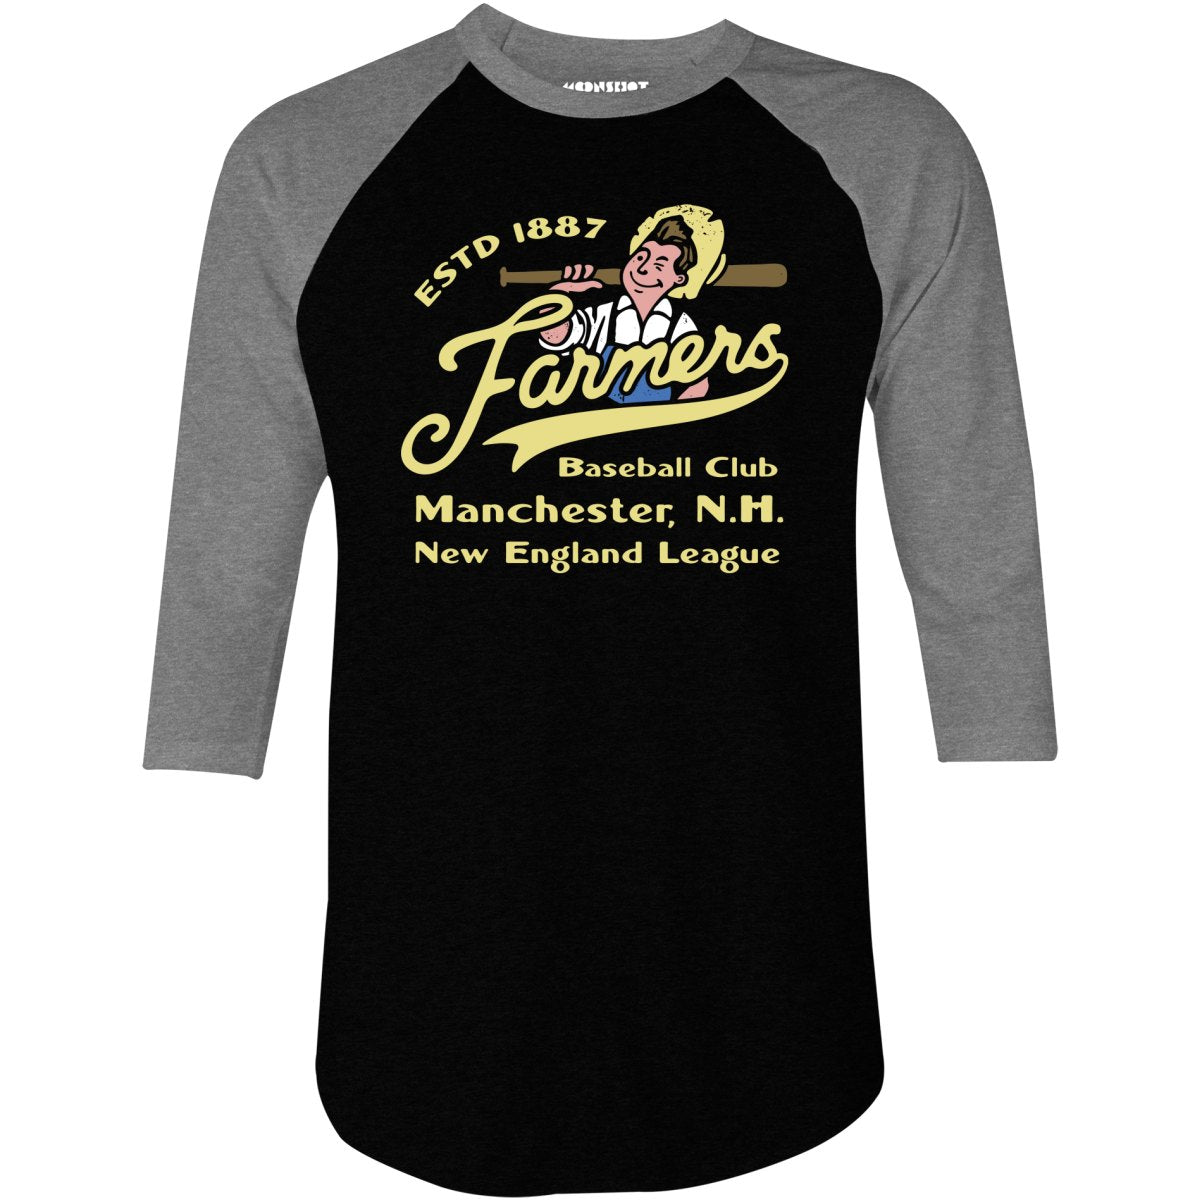 Manchester Farmers - New Hampshire - Vintage Defunct Baseball Teams - 3/4 Sleeve Raglan T-Shirt